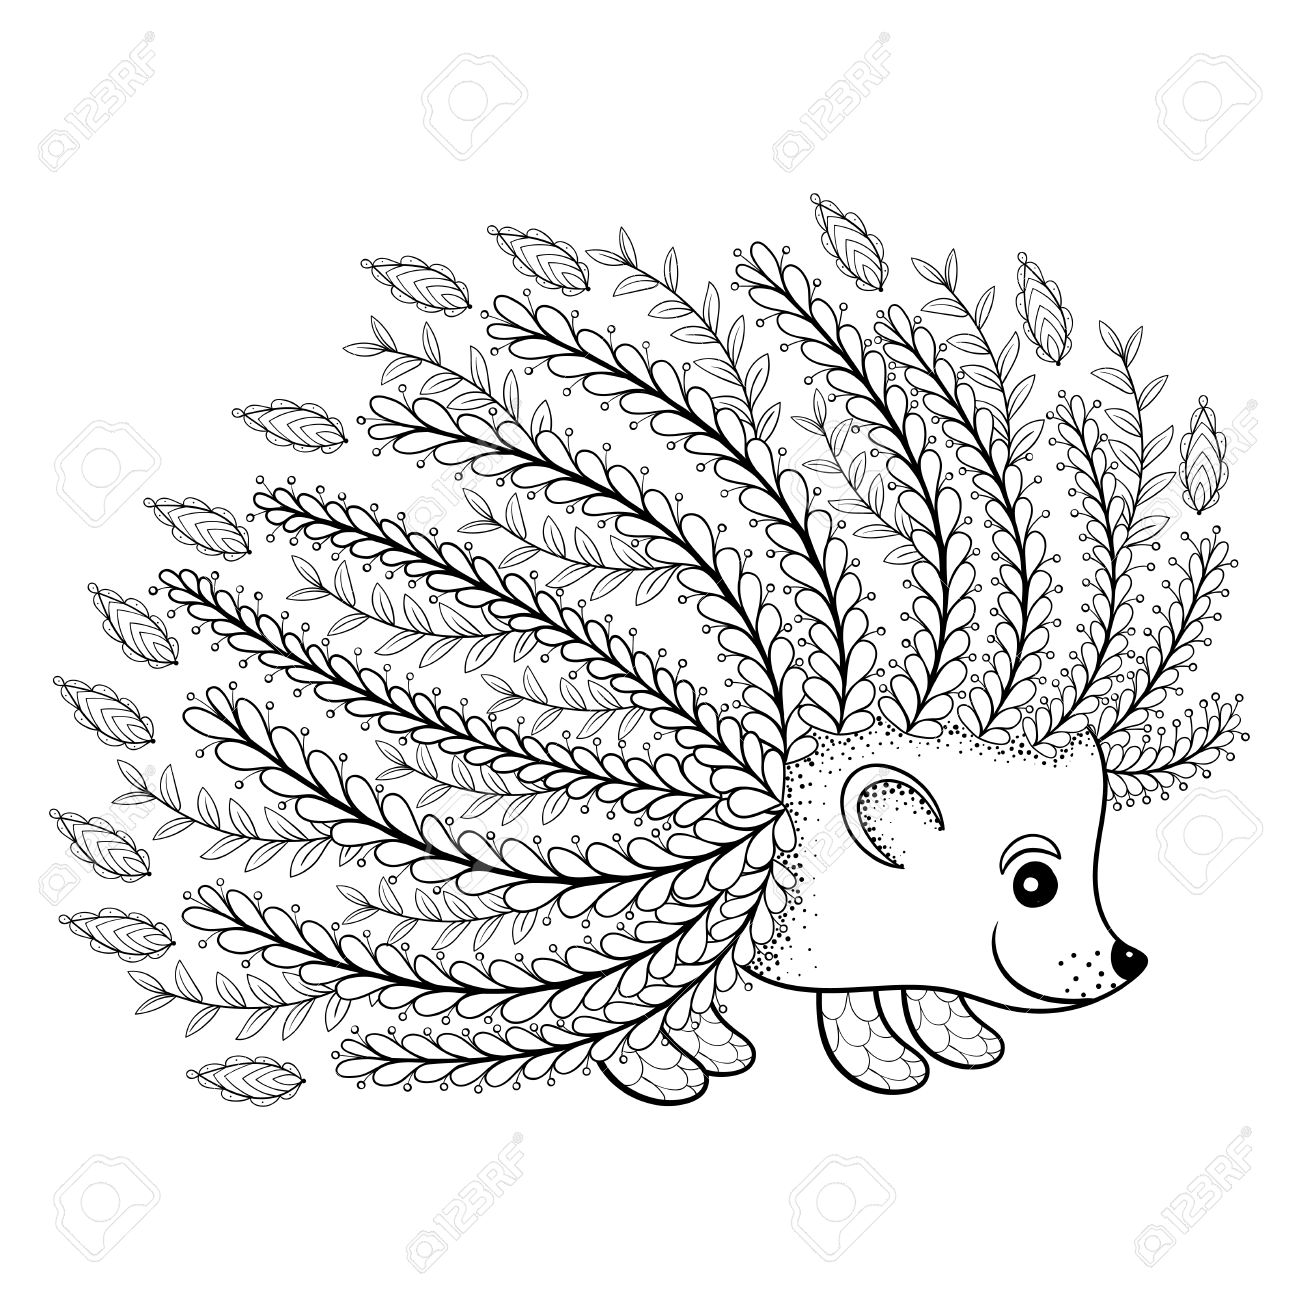 hedgehog line drawing at getdrawings | free for